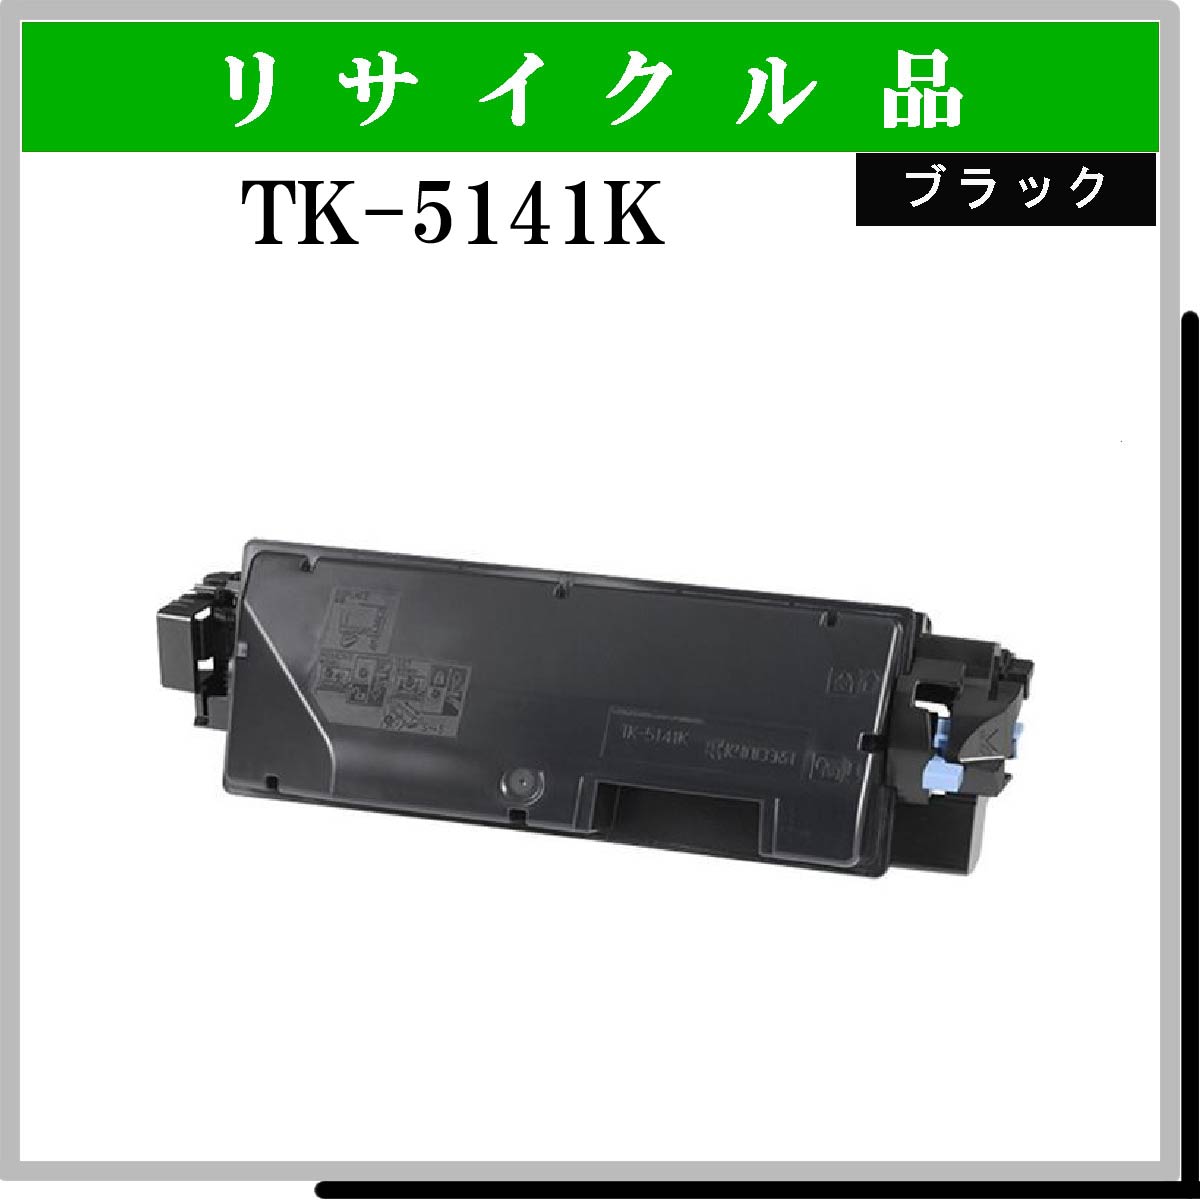 TK-5141K - ウインドウを閉じる